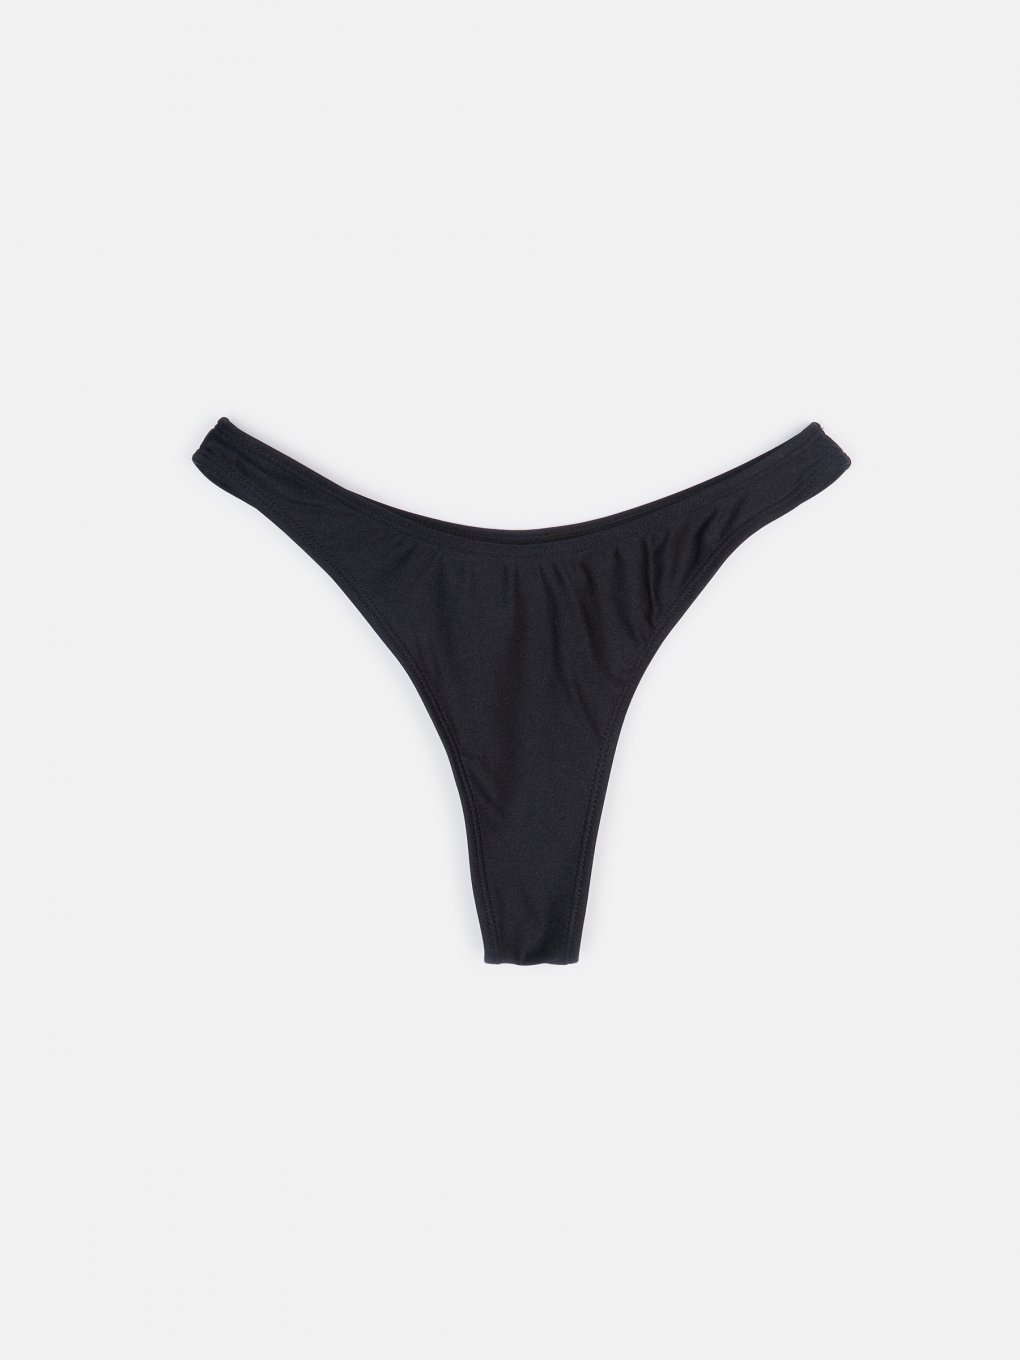 Thong bikini bottom